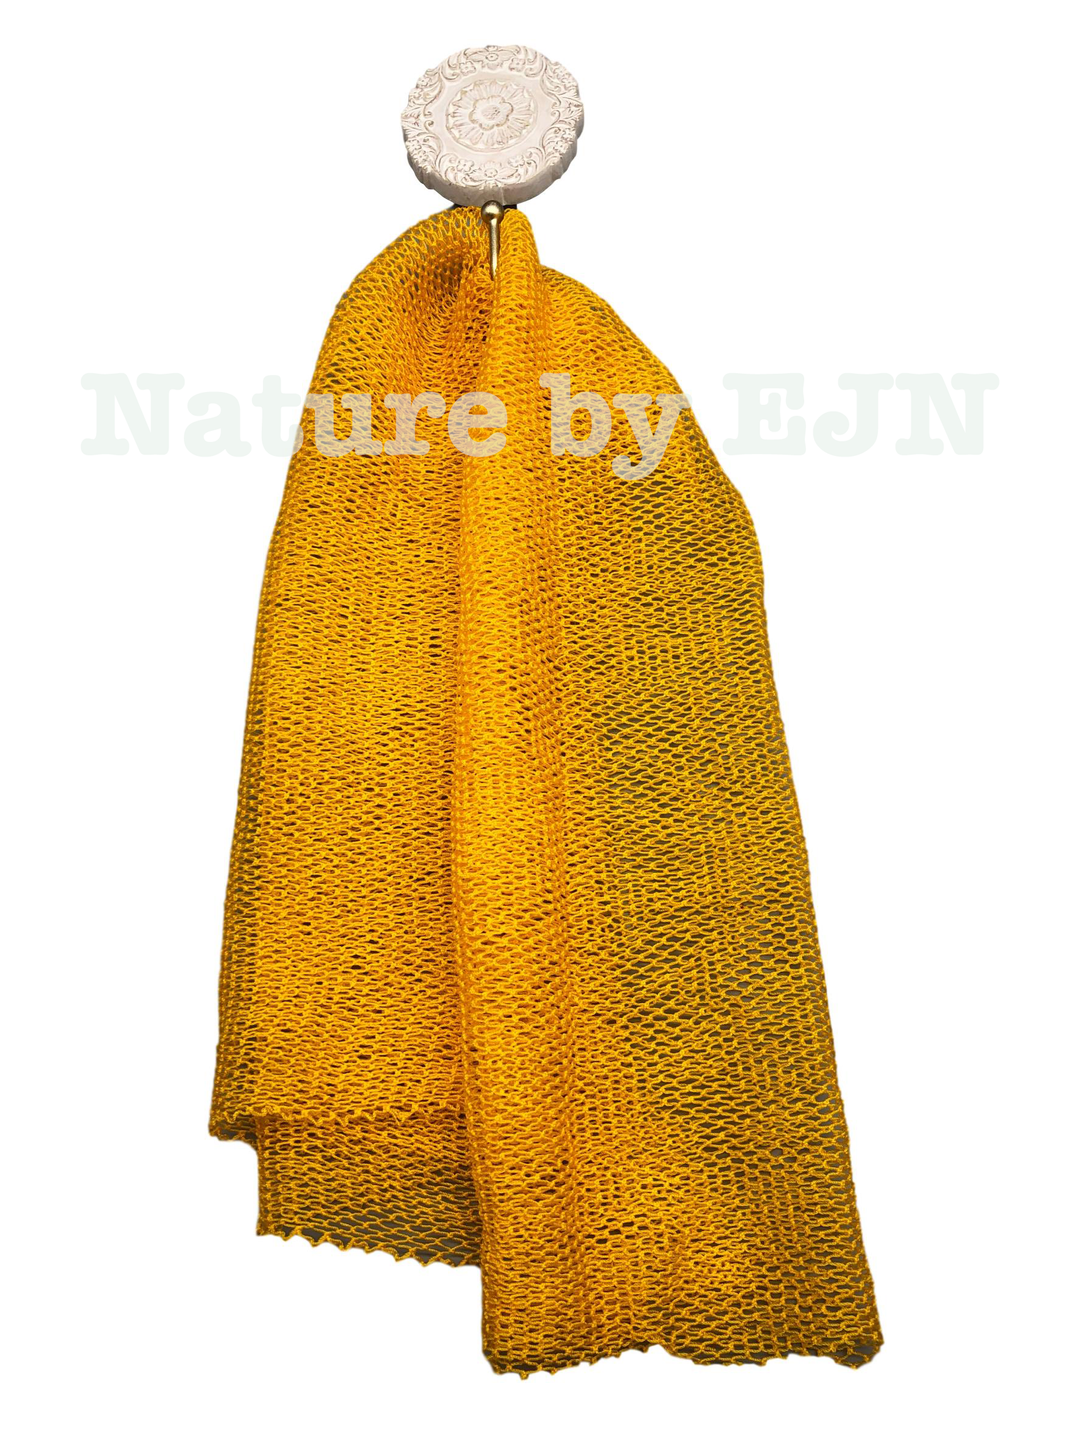 Nature by EJN - Net Bath Sponge, Long, Skin Exfoliation, African, Porous (49", Yellow)